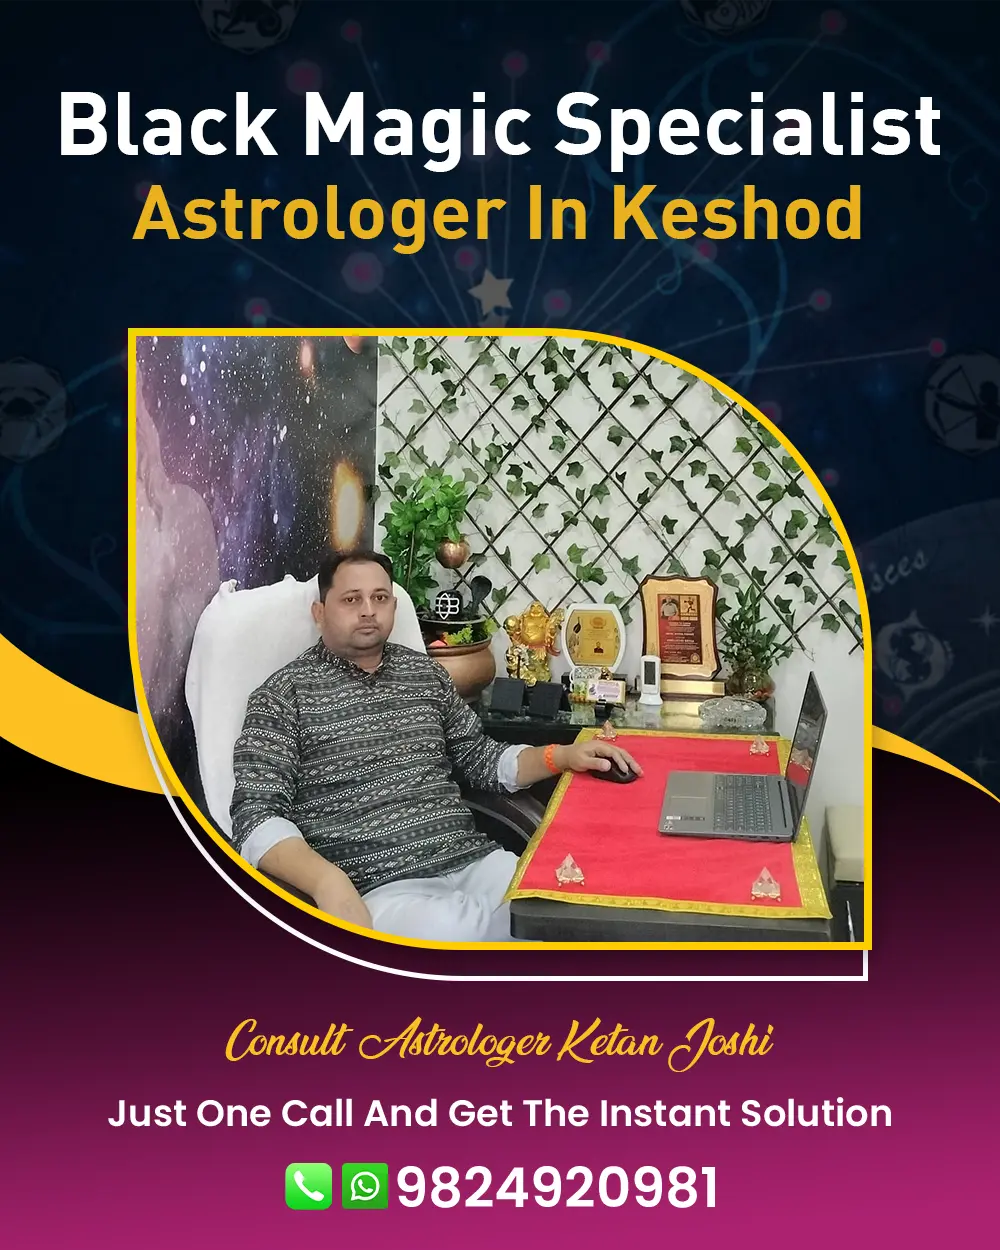 Black Magic Specialist Astrologer In Keshod